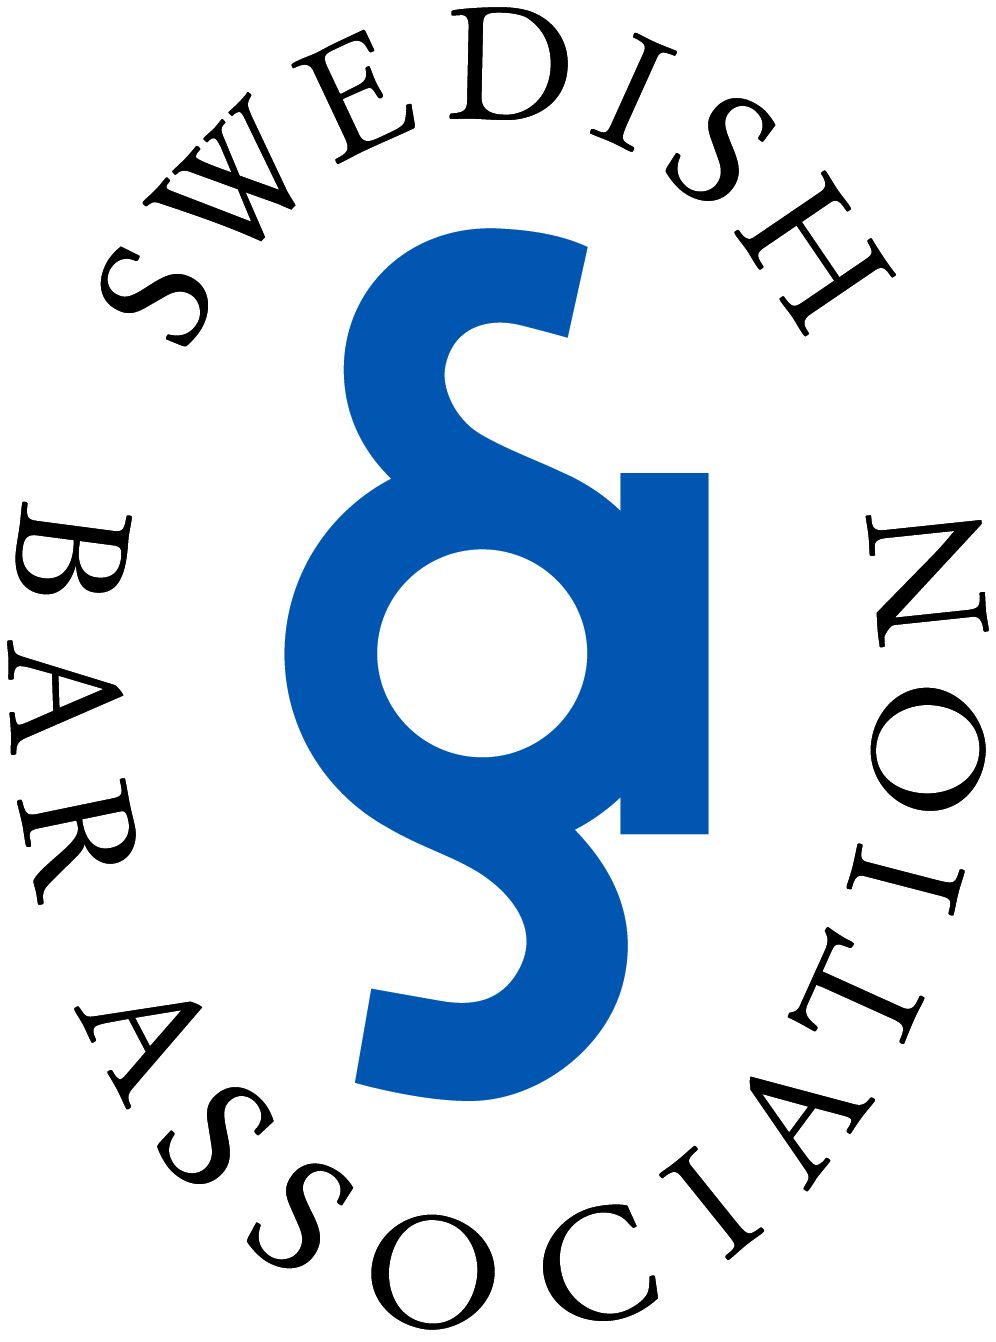 Swedish Bar Association